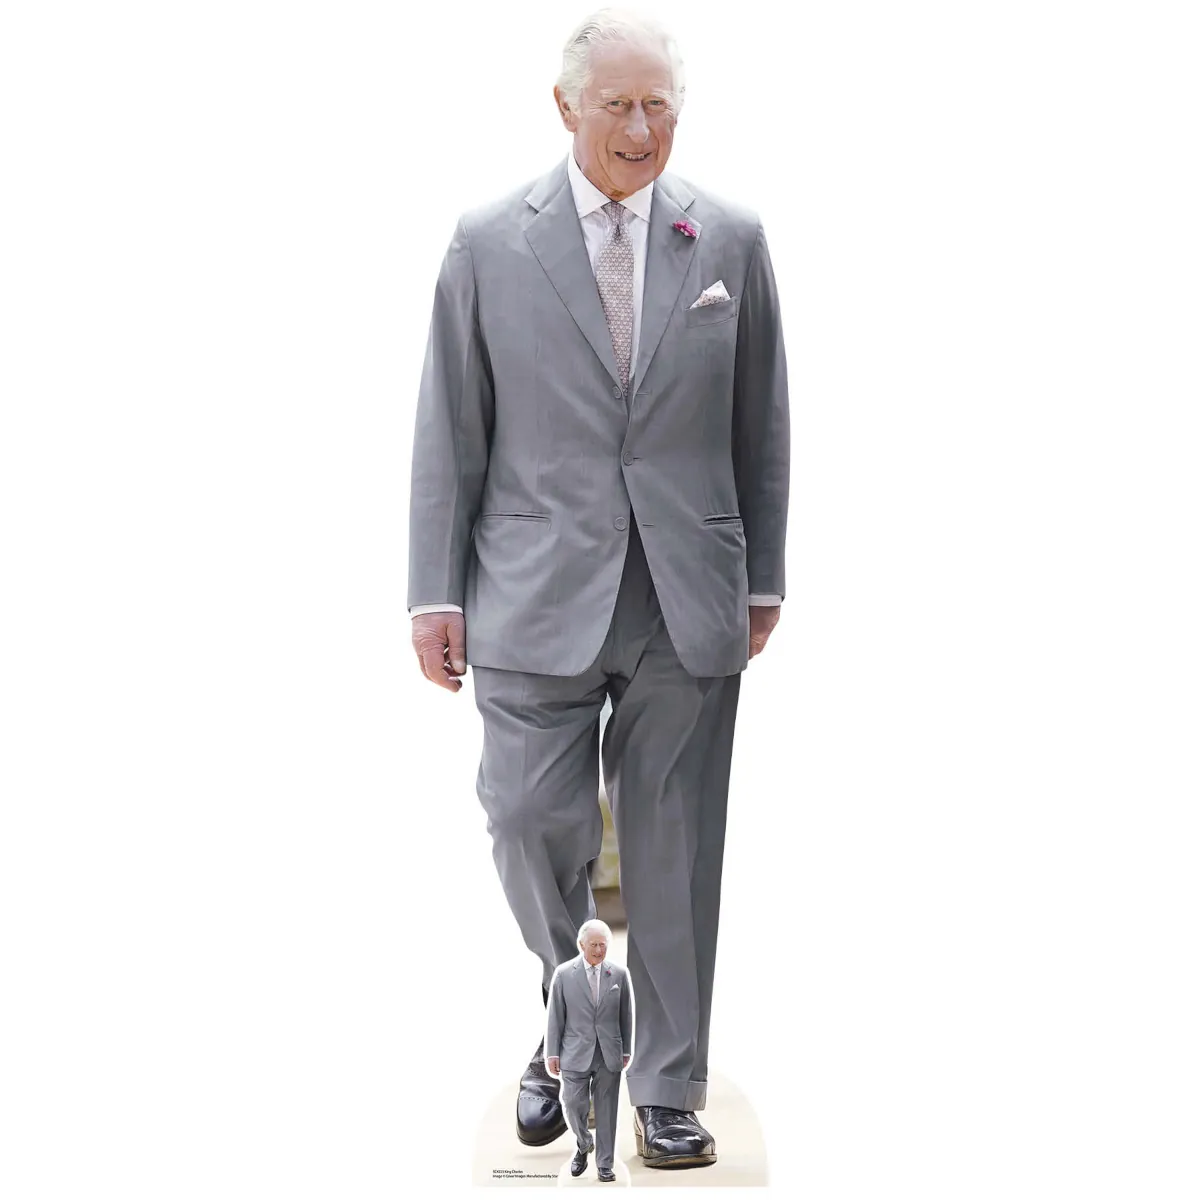 SC4223 King Charles III 'Grey Suit' (British Royal) Lifesize + Mini Cardboard Cutout Standee Front